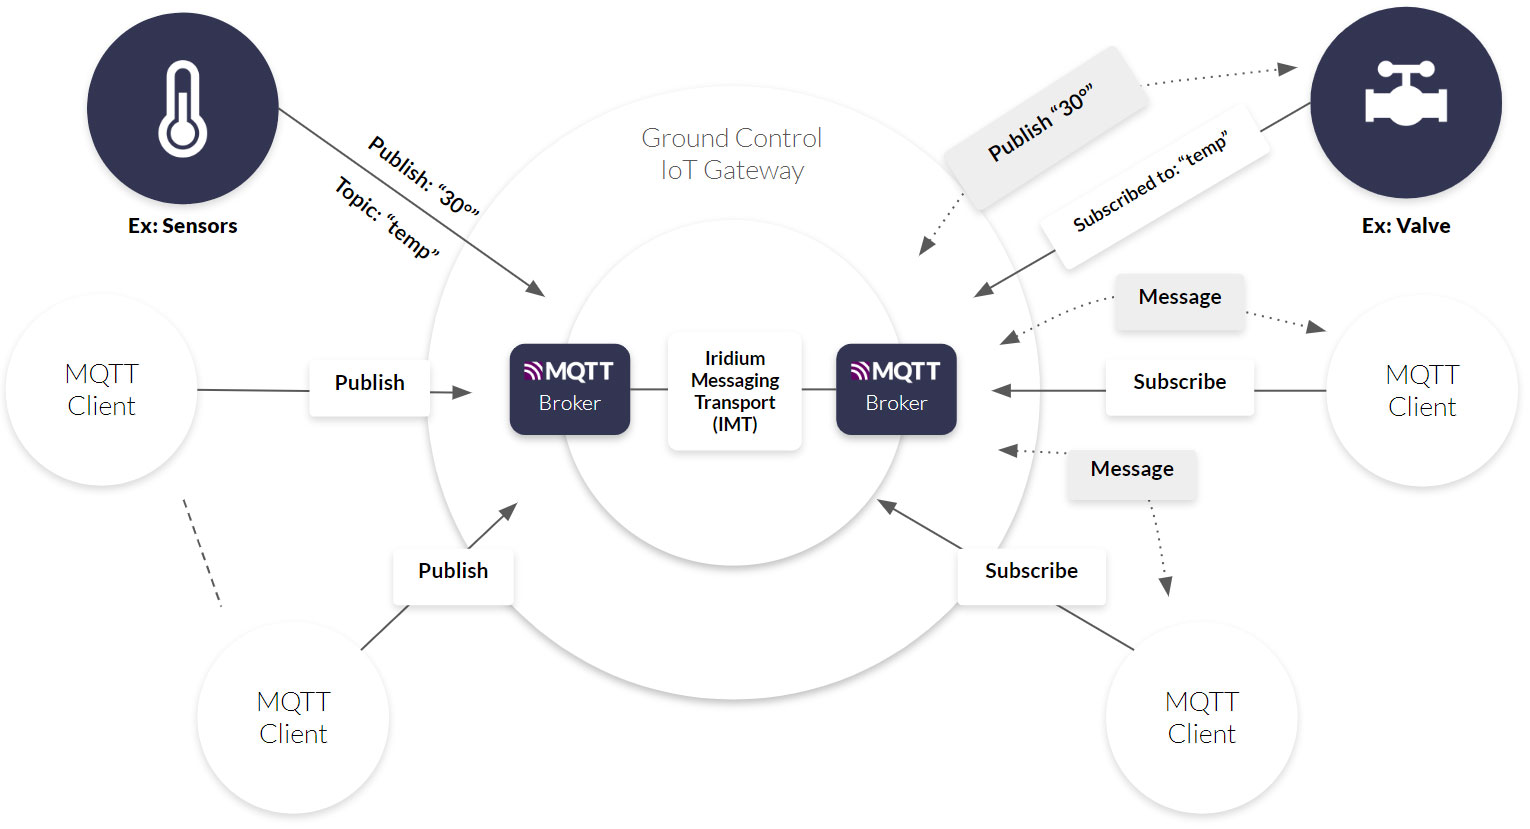 Illustration of Ground Control's IoT Gateway